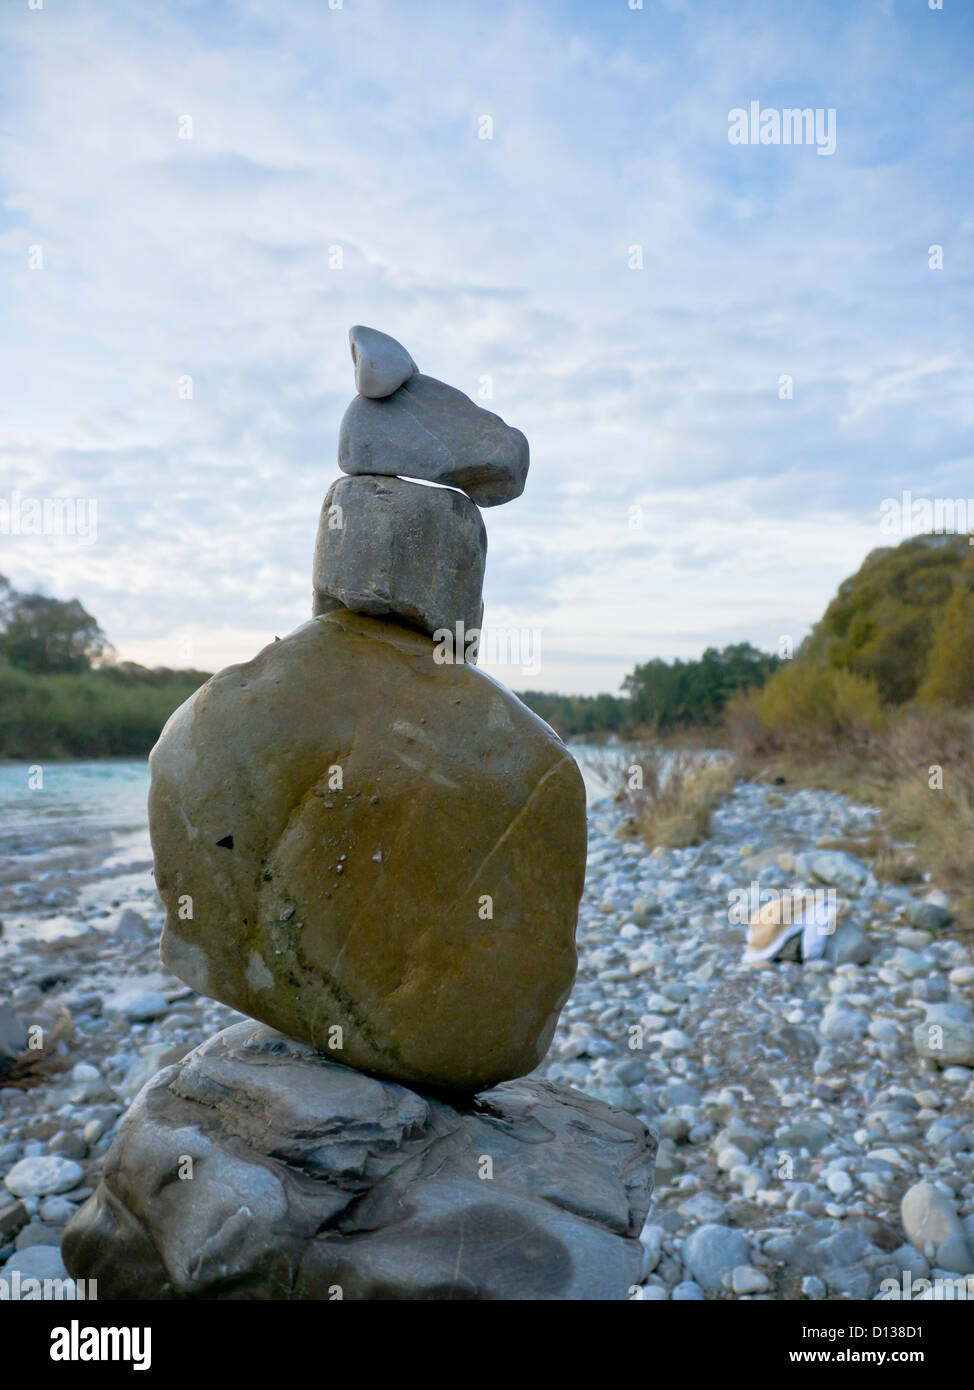 Germany, Bavaria, Animal representation with stone Stock Photo